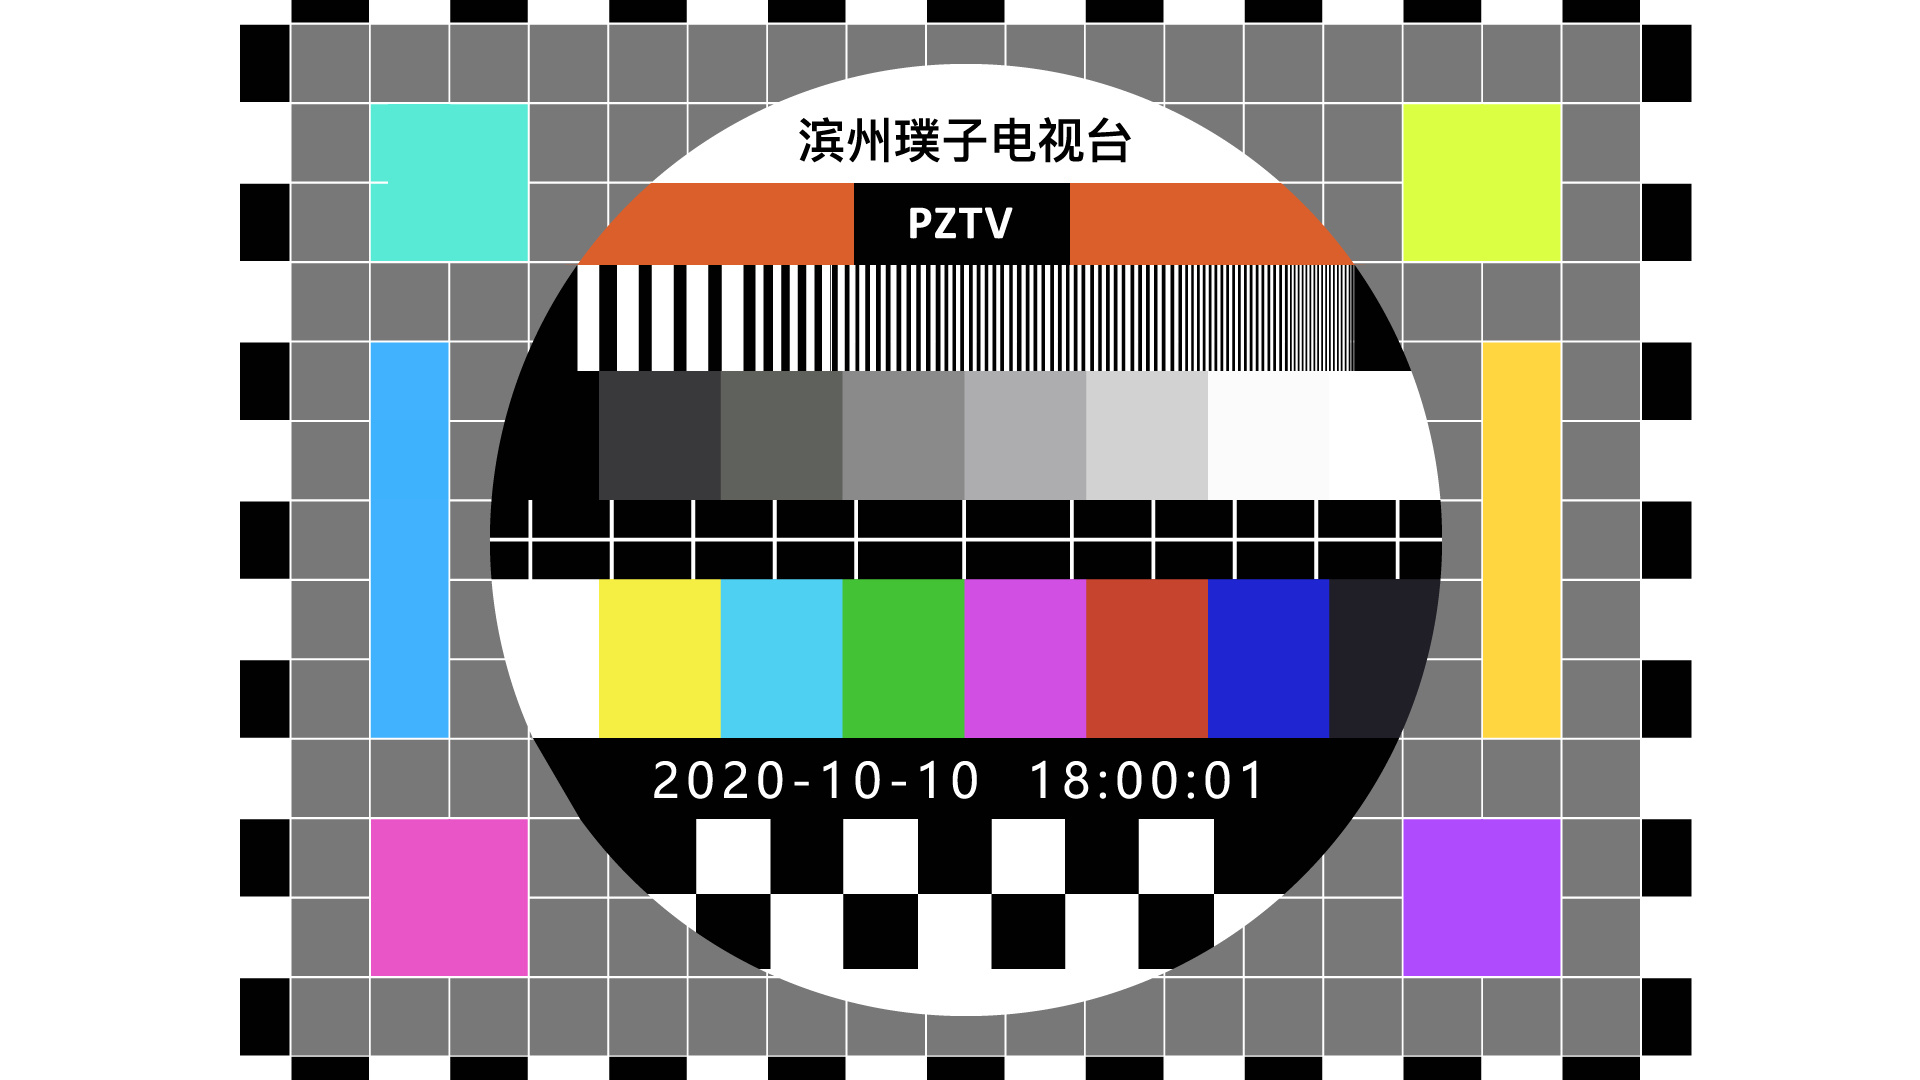 4K(UHD TV)分辨率测试图卡-赛麦吉图像测试卡官网